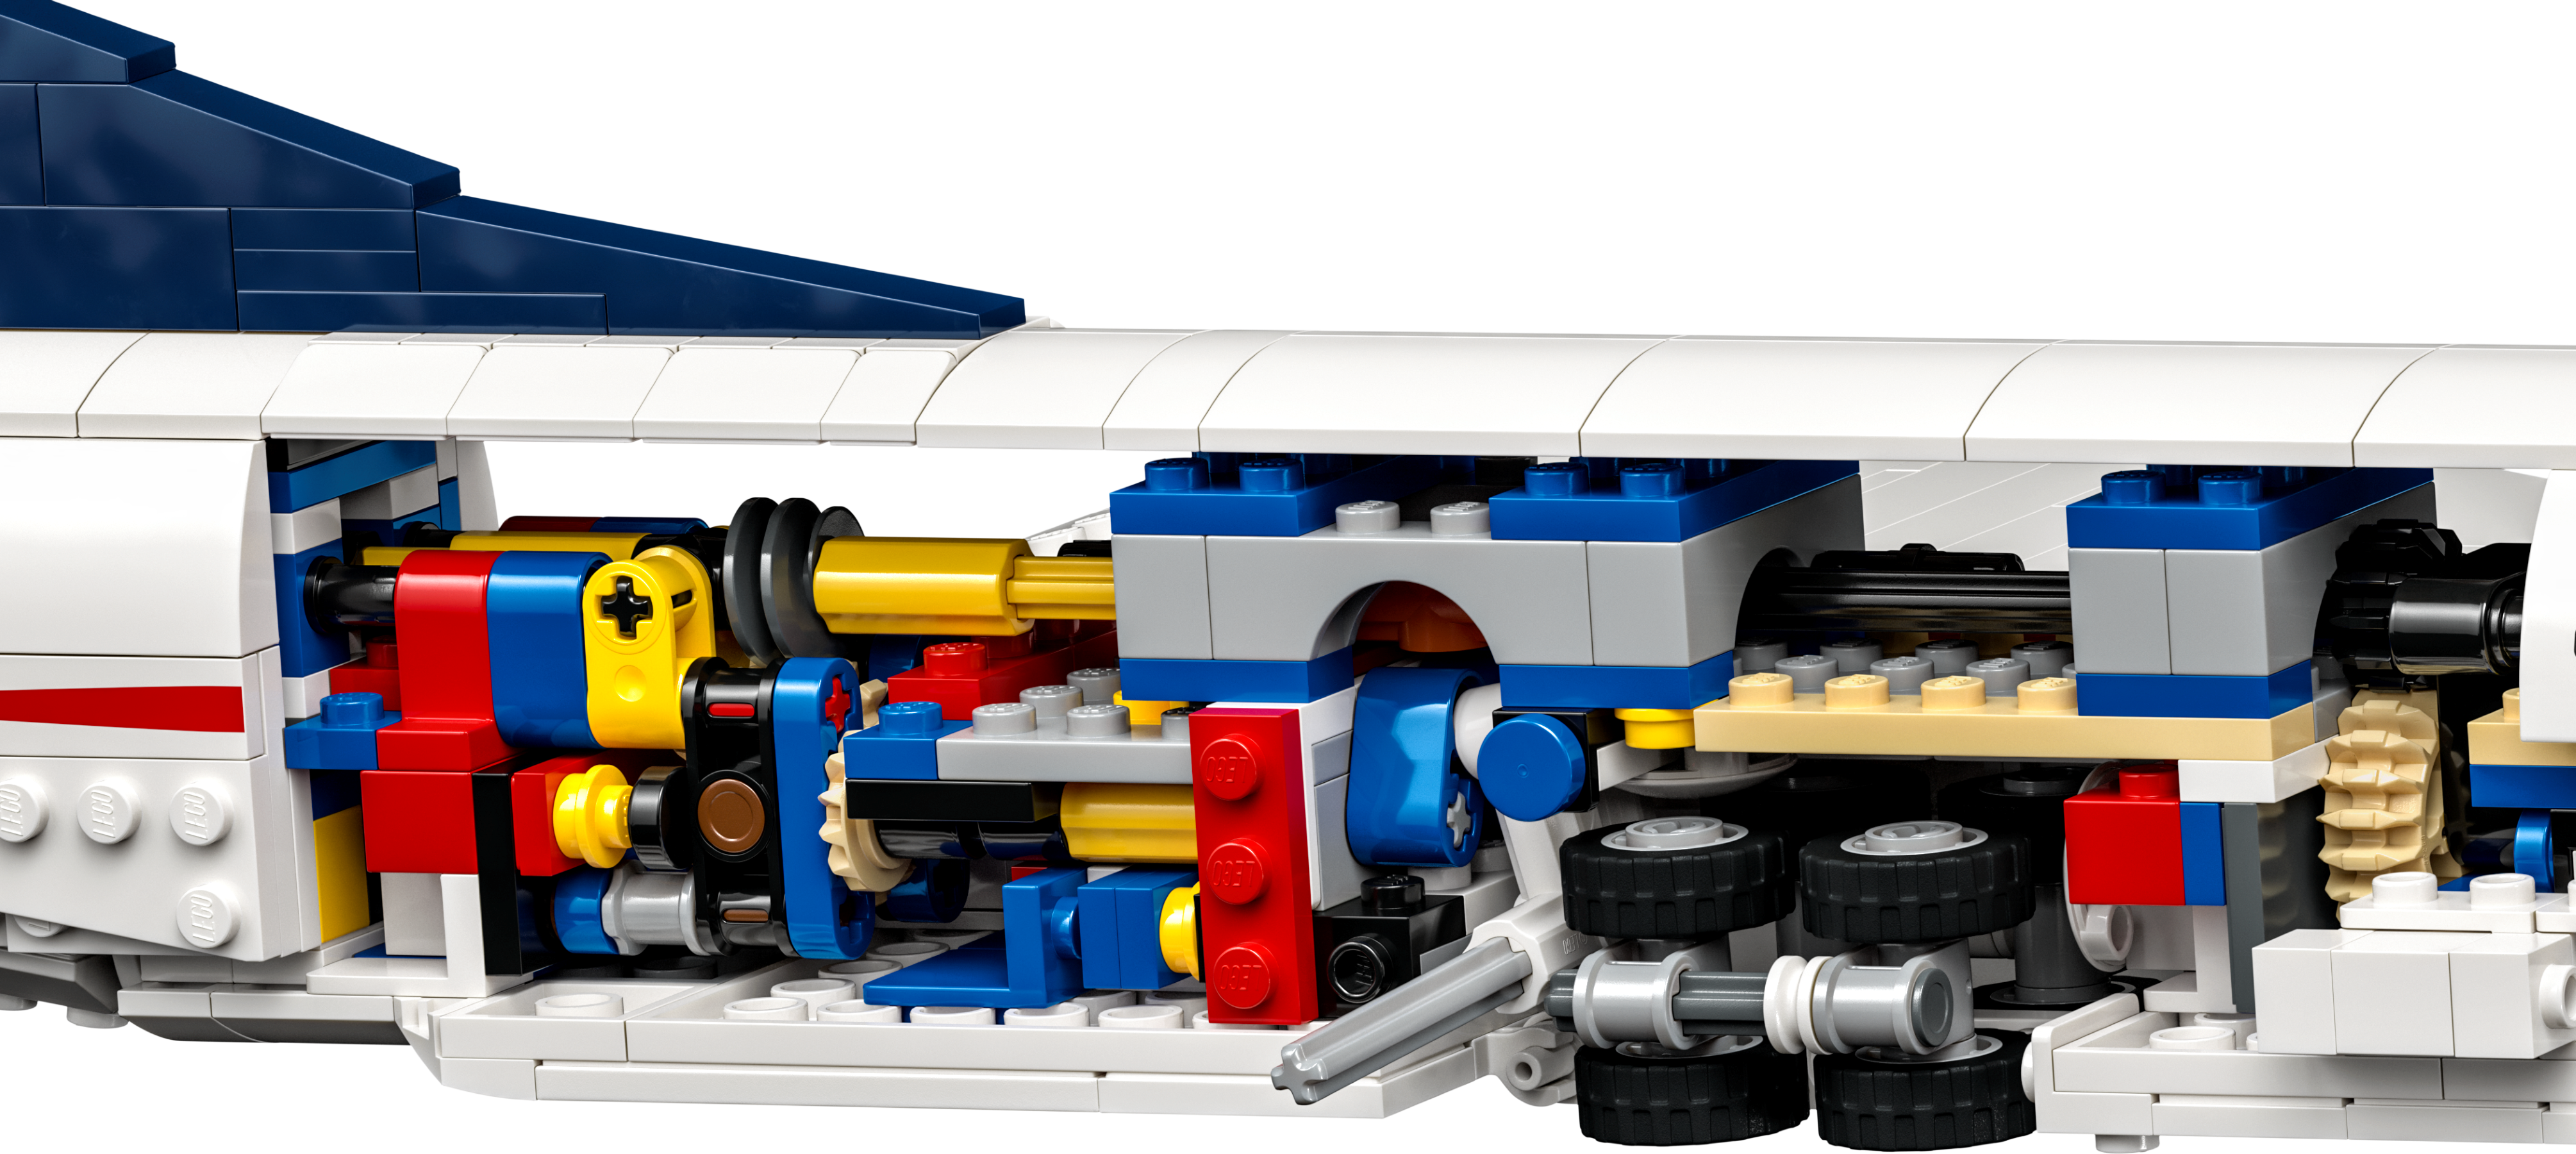 LEGO ICONS CONCORDE  Review & Comparison 